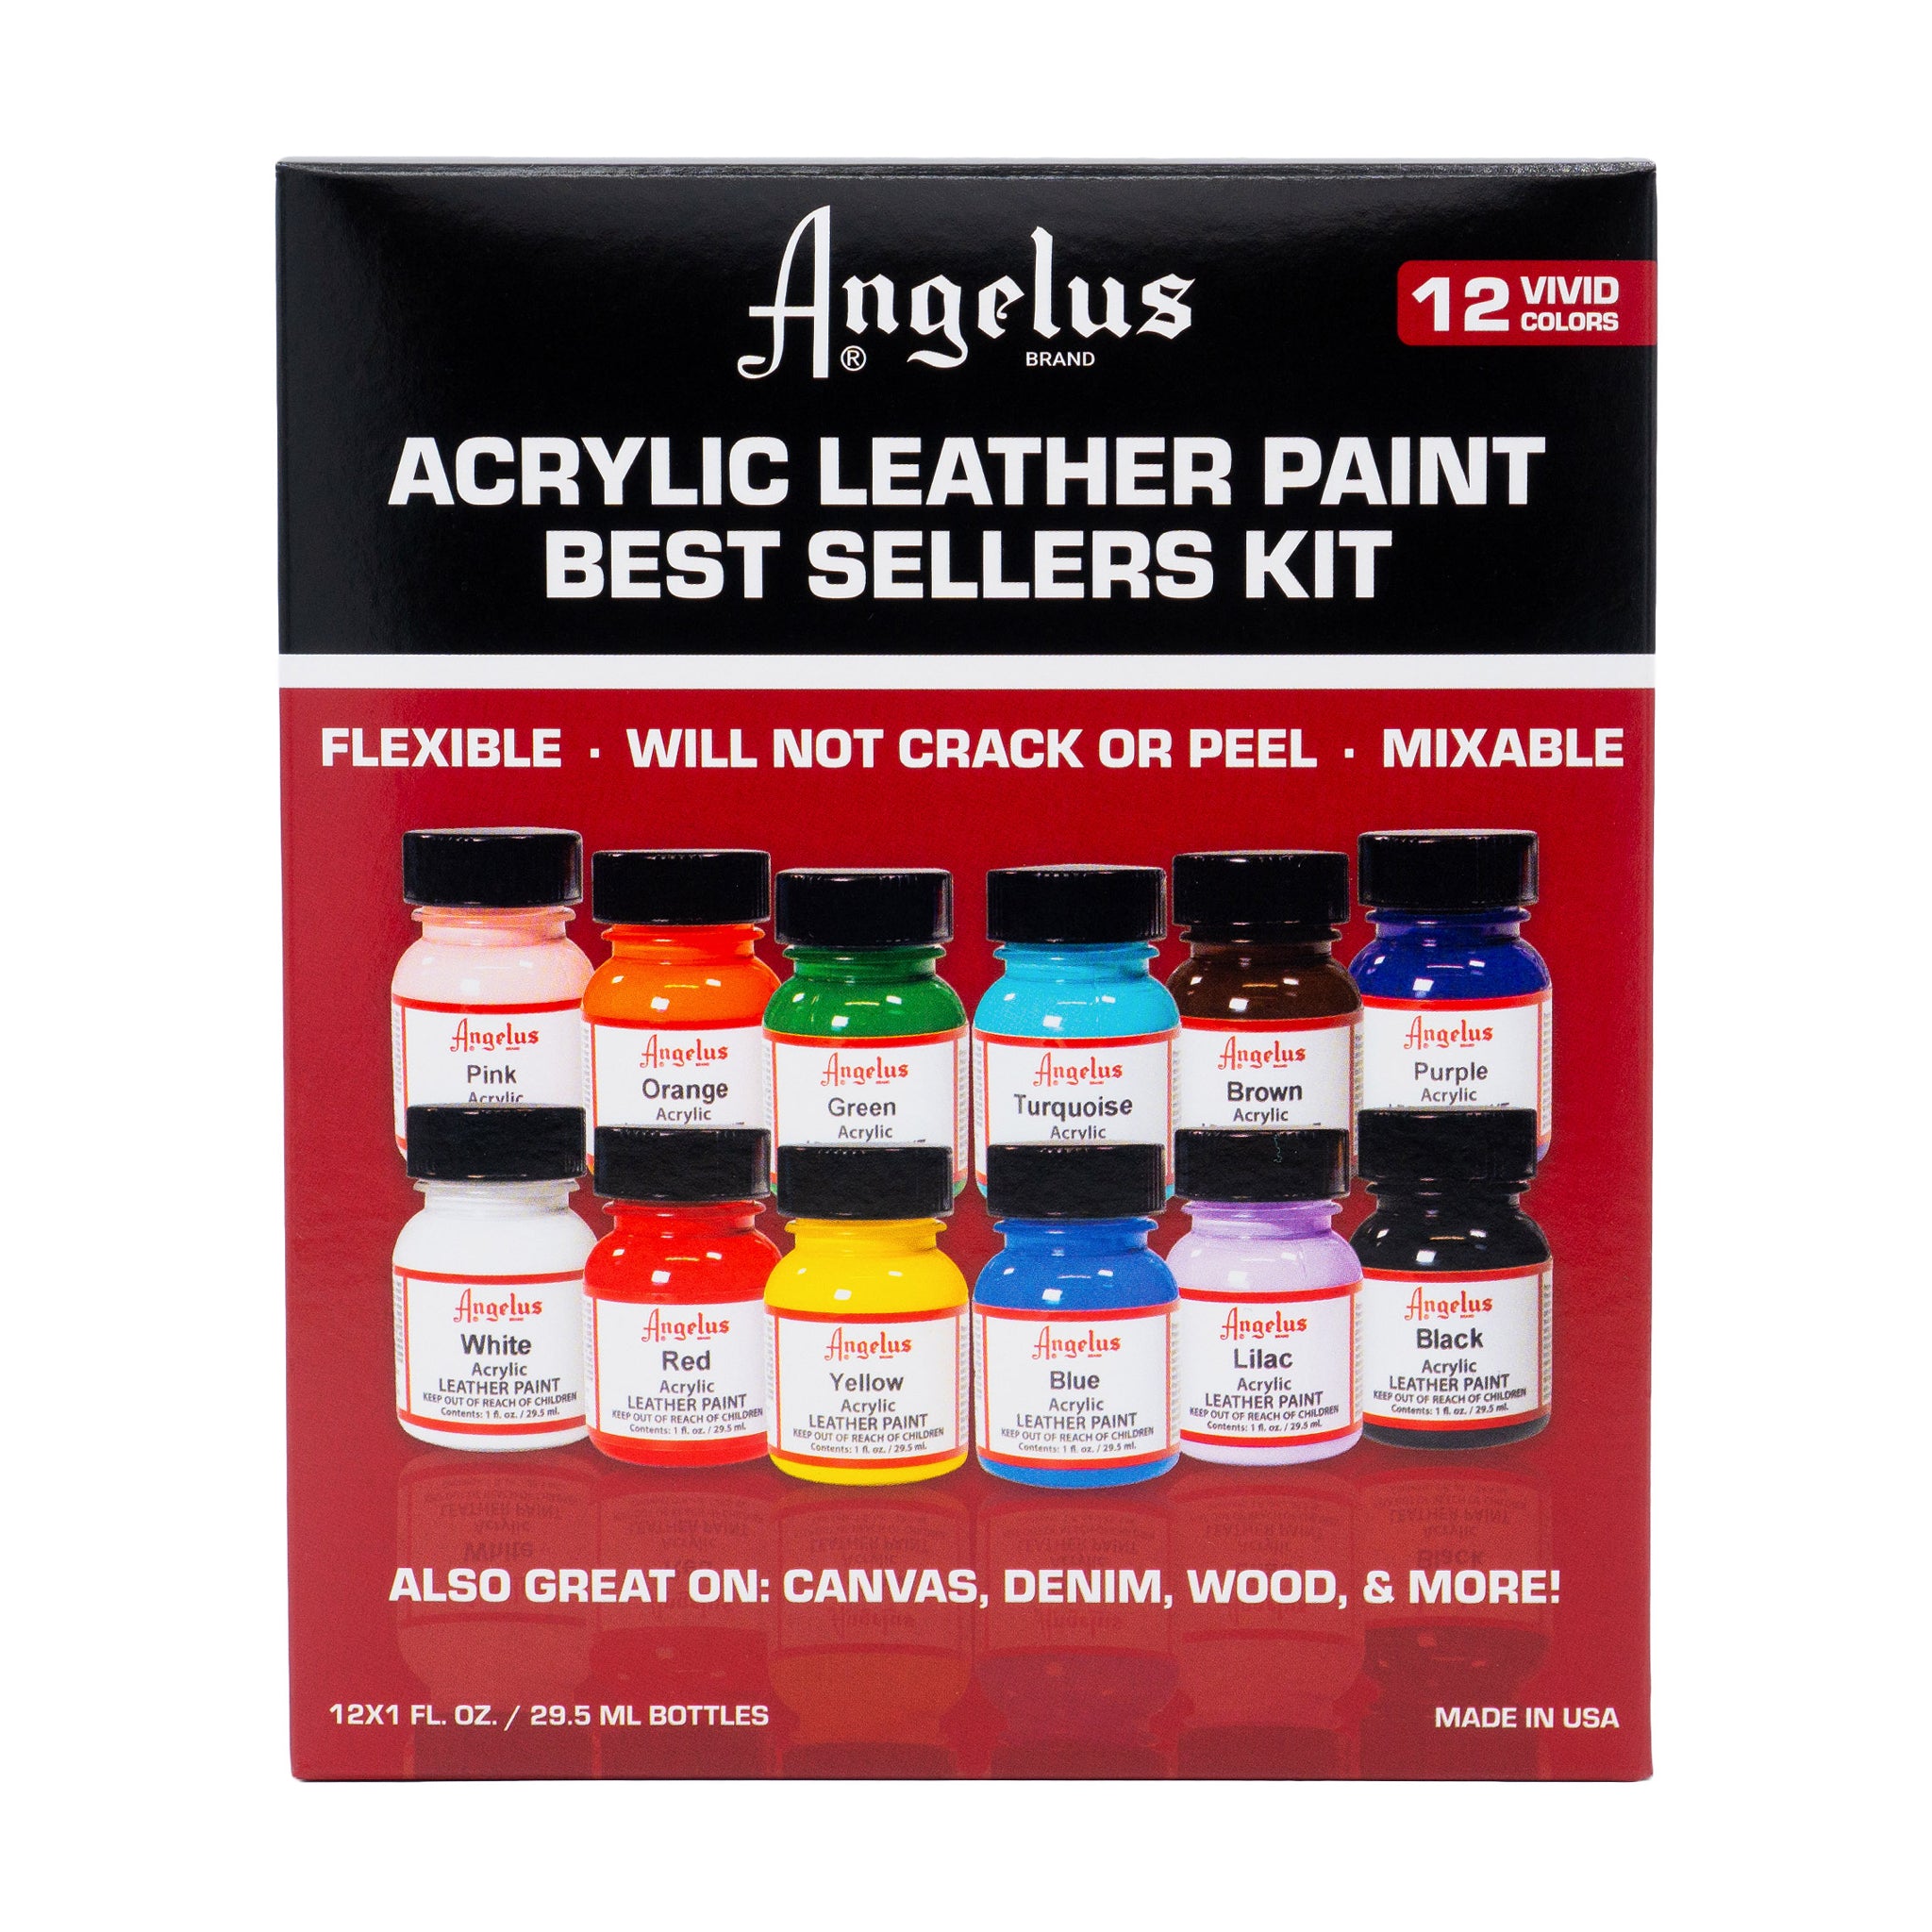 Angelus Acrylic Leather Paint 1oz Pale Blue